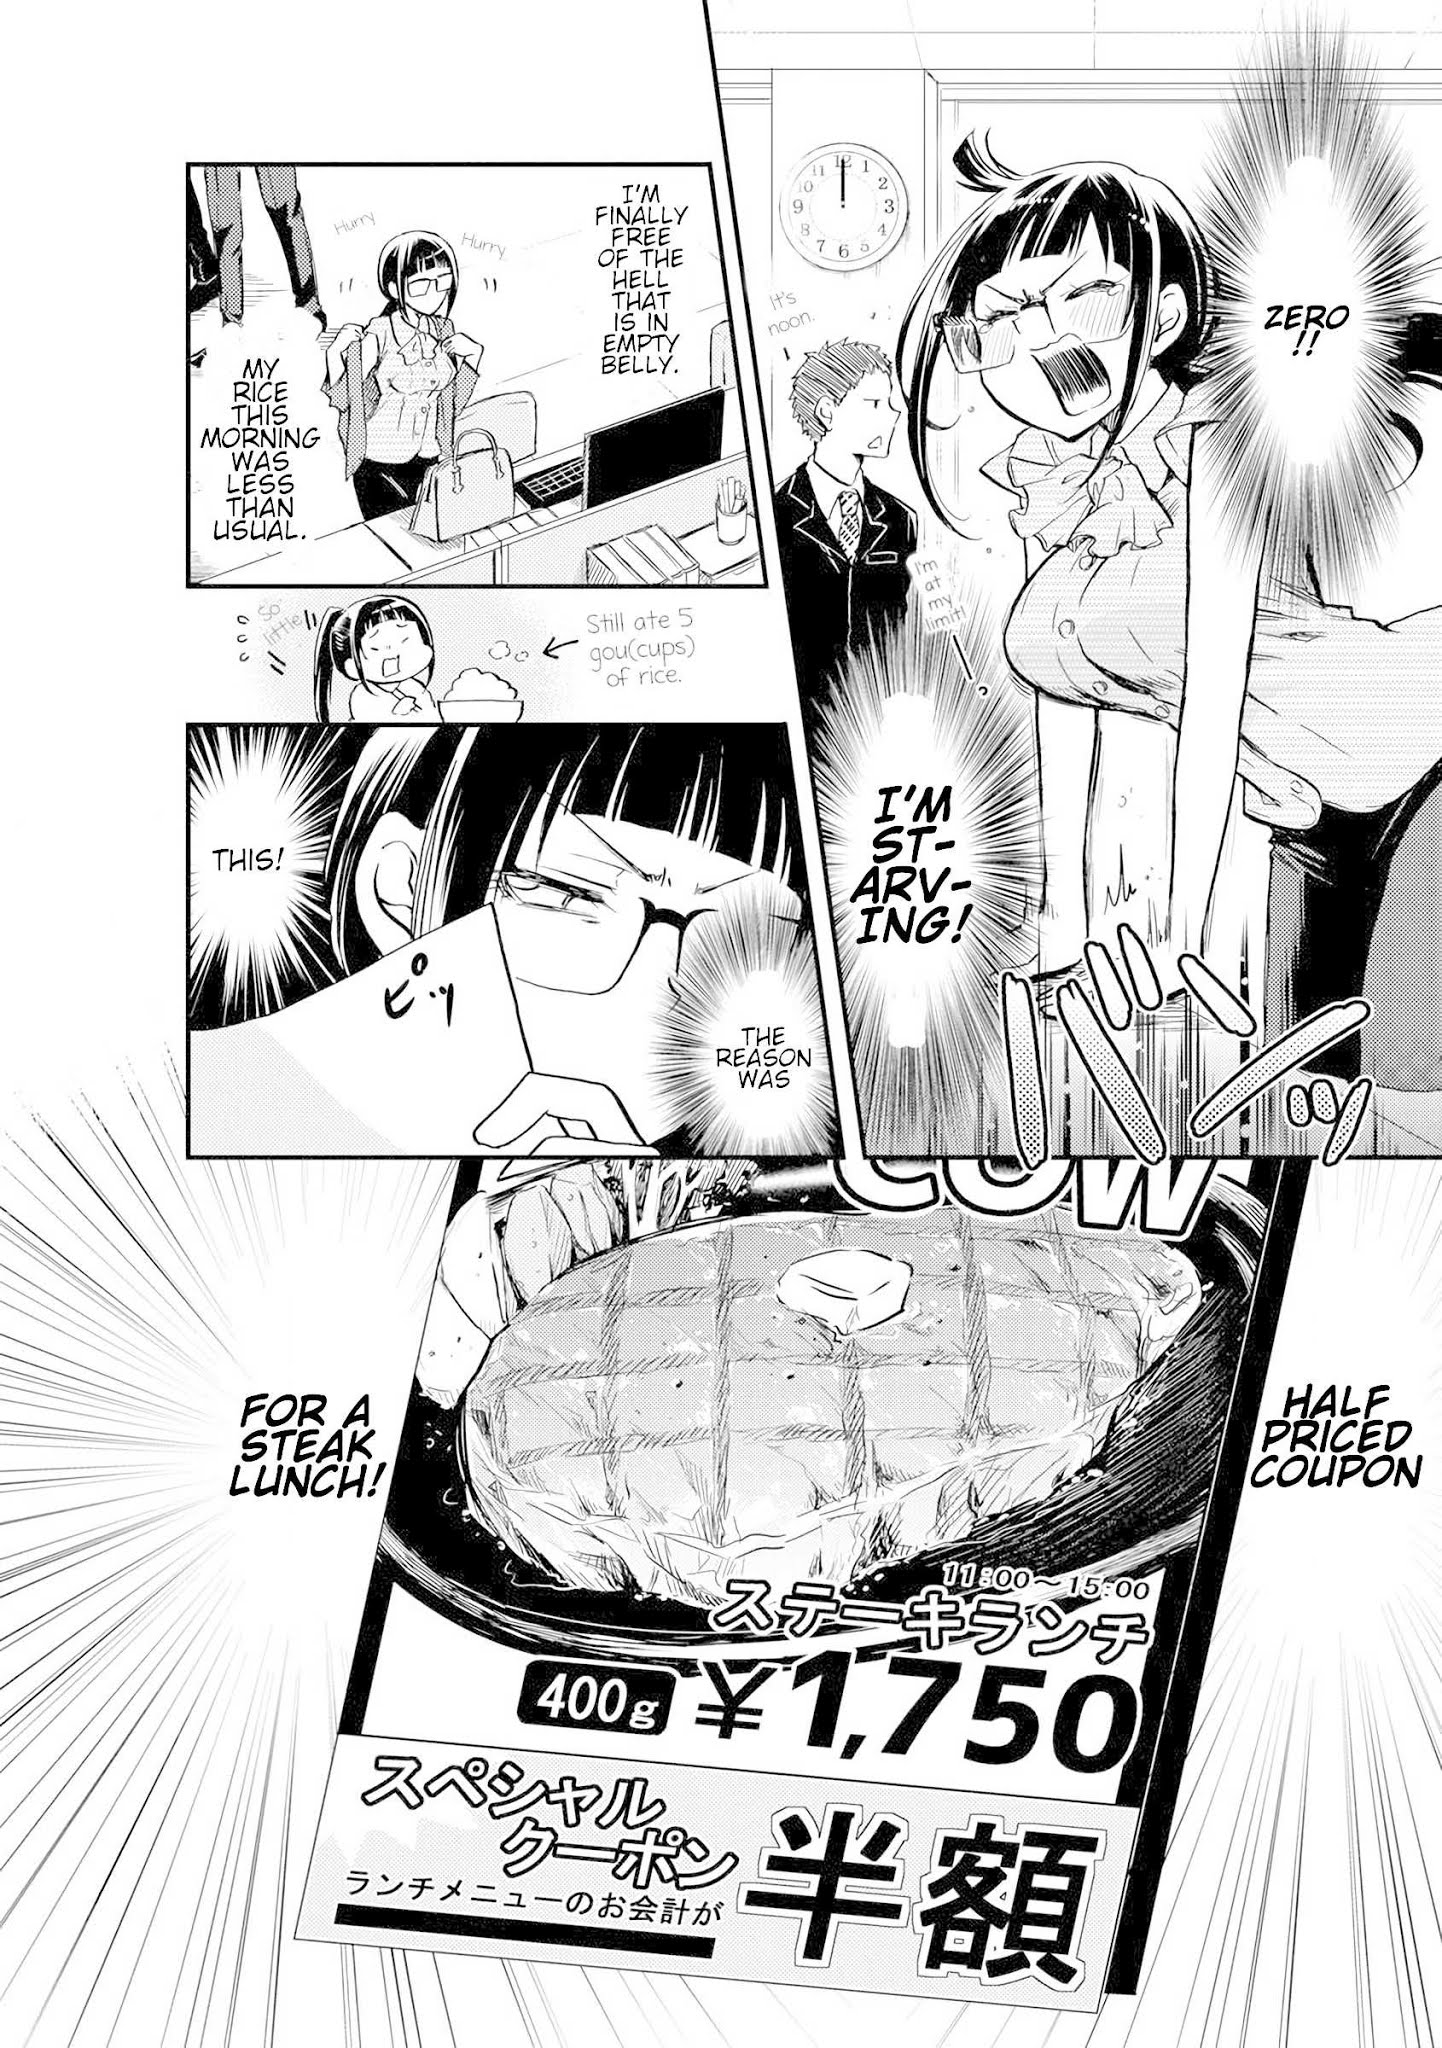 Harukawa-San Is Hungry Today Too. - Page 2